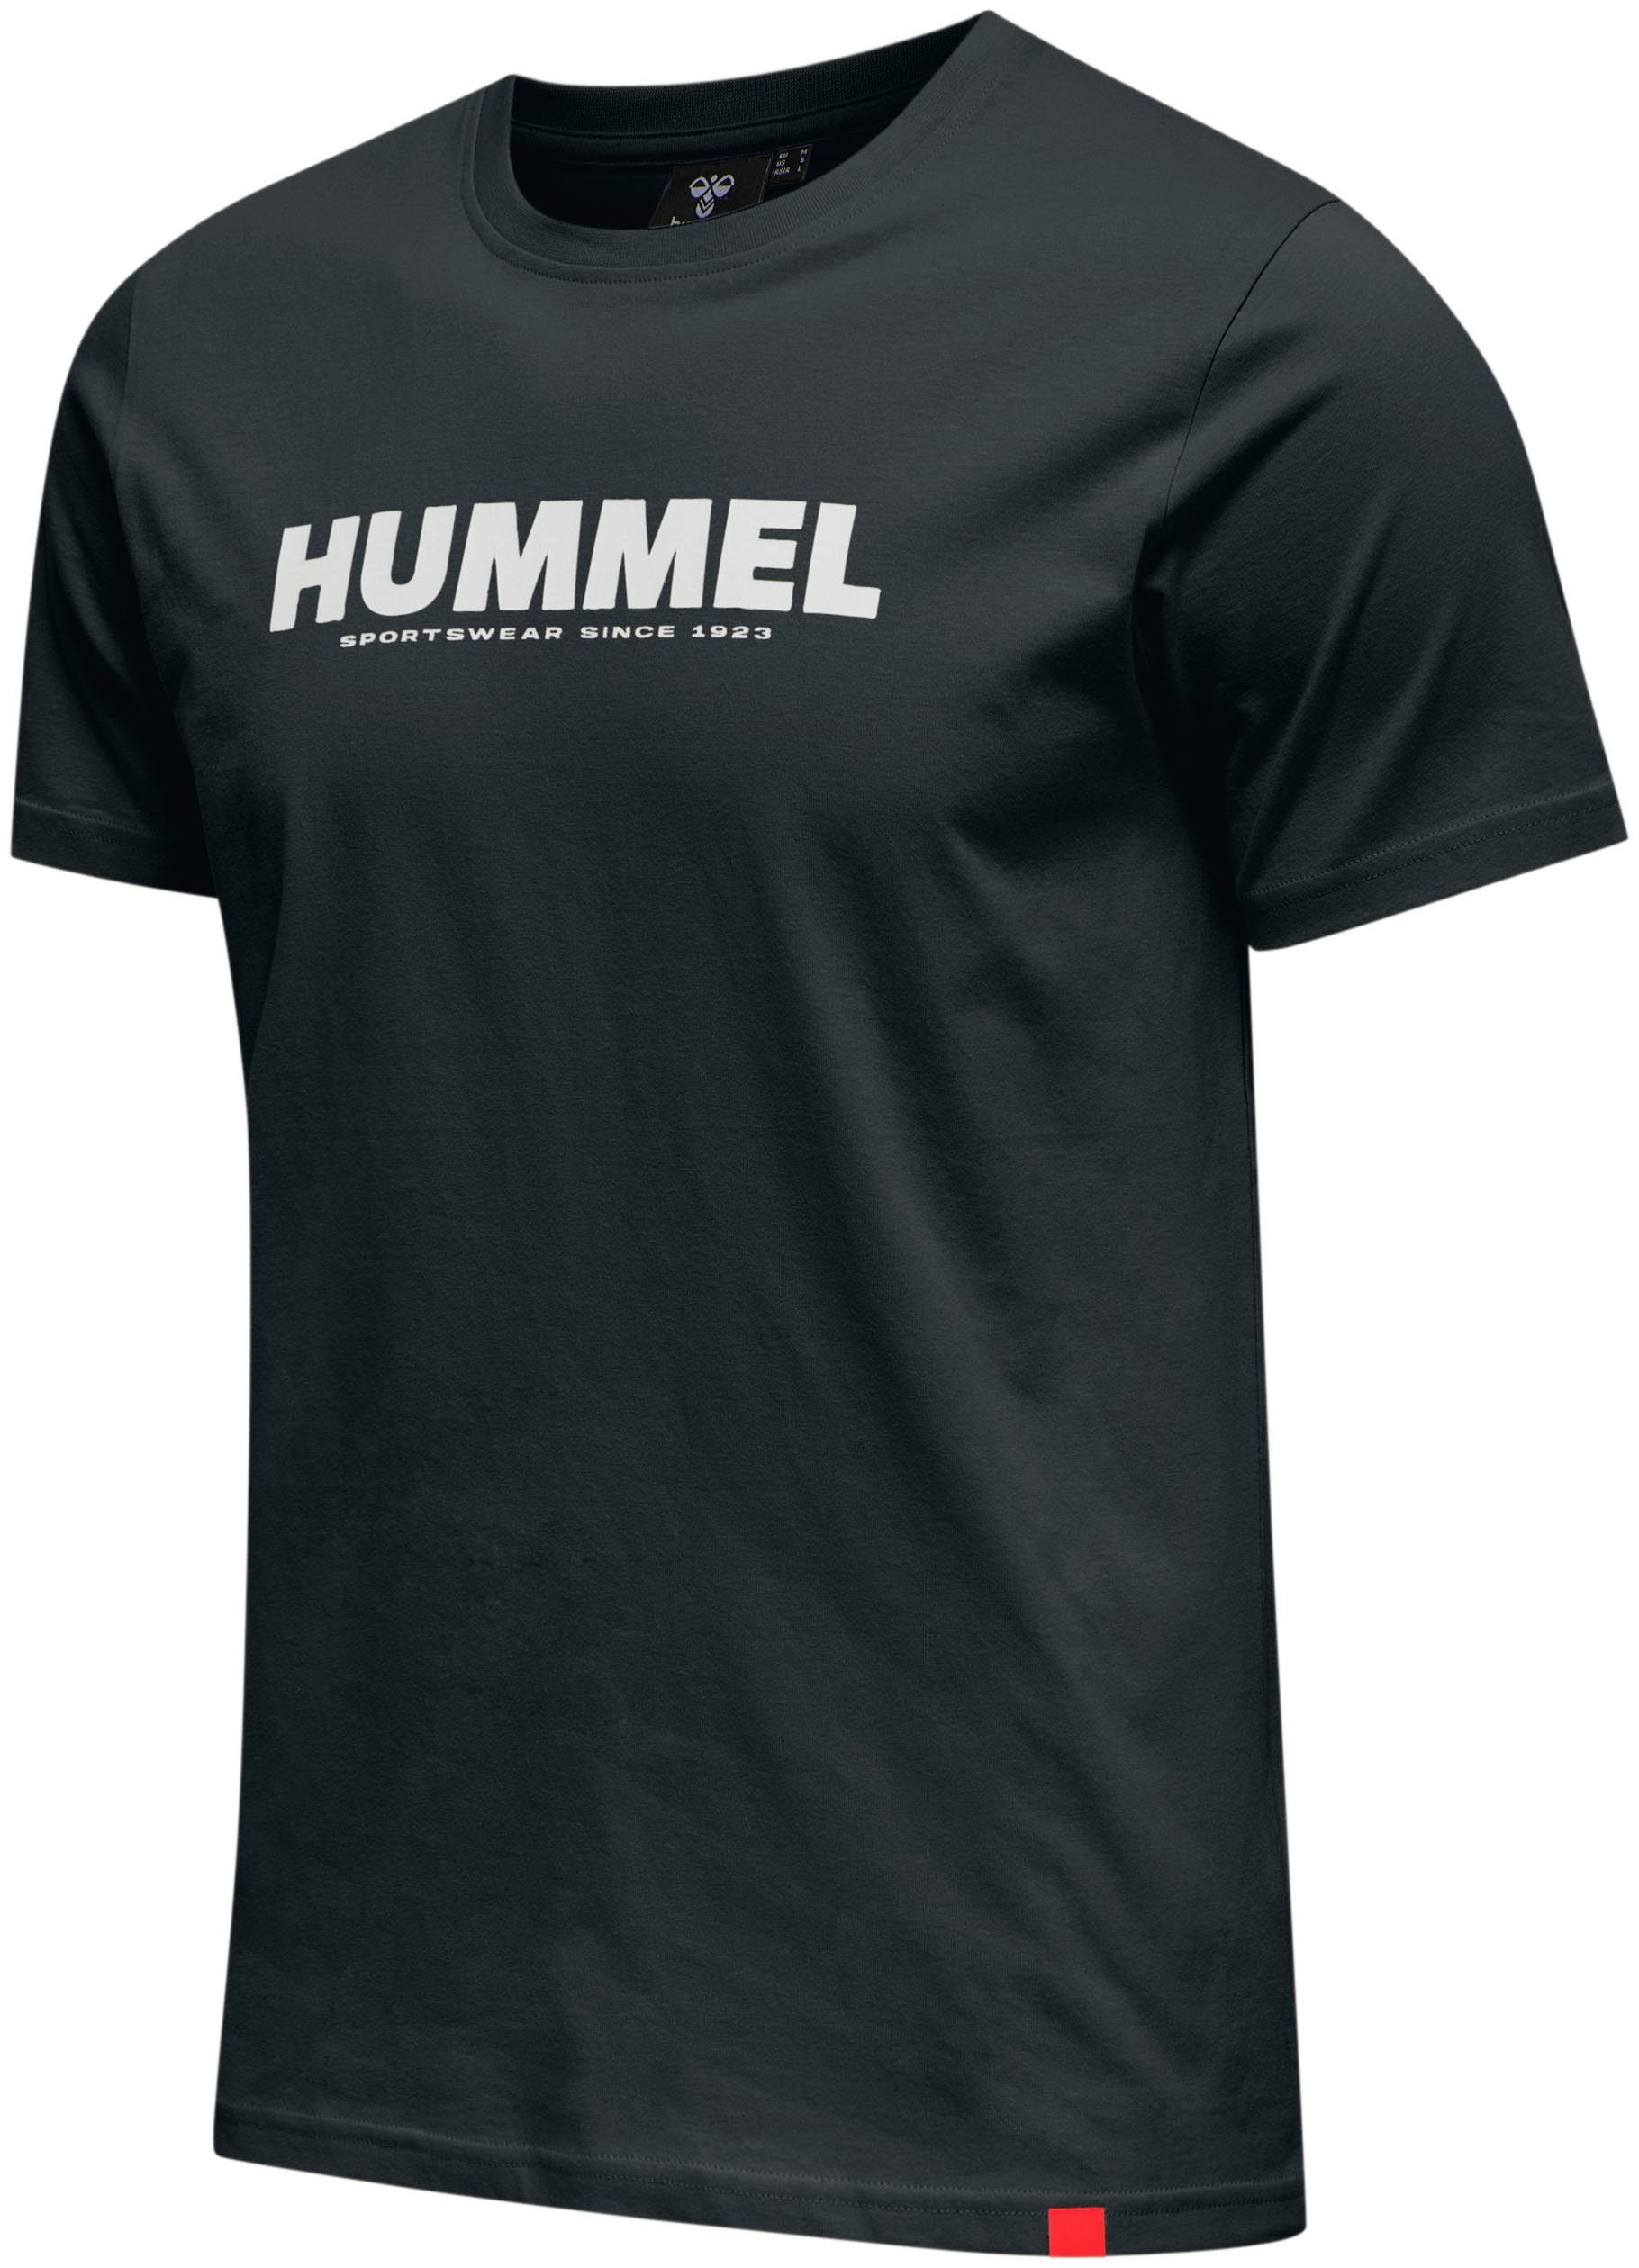 T-Shirt schwarz Logo hummel Print mit